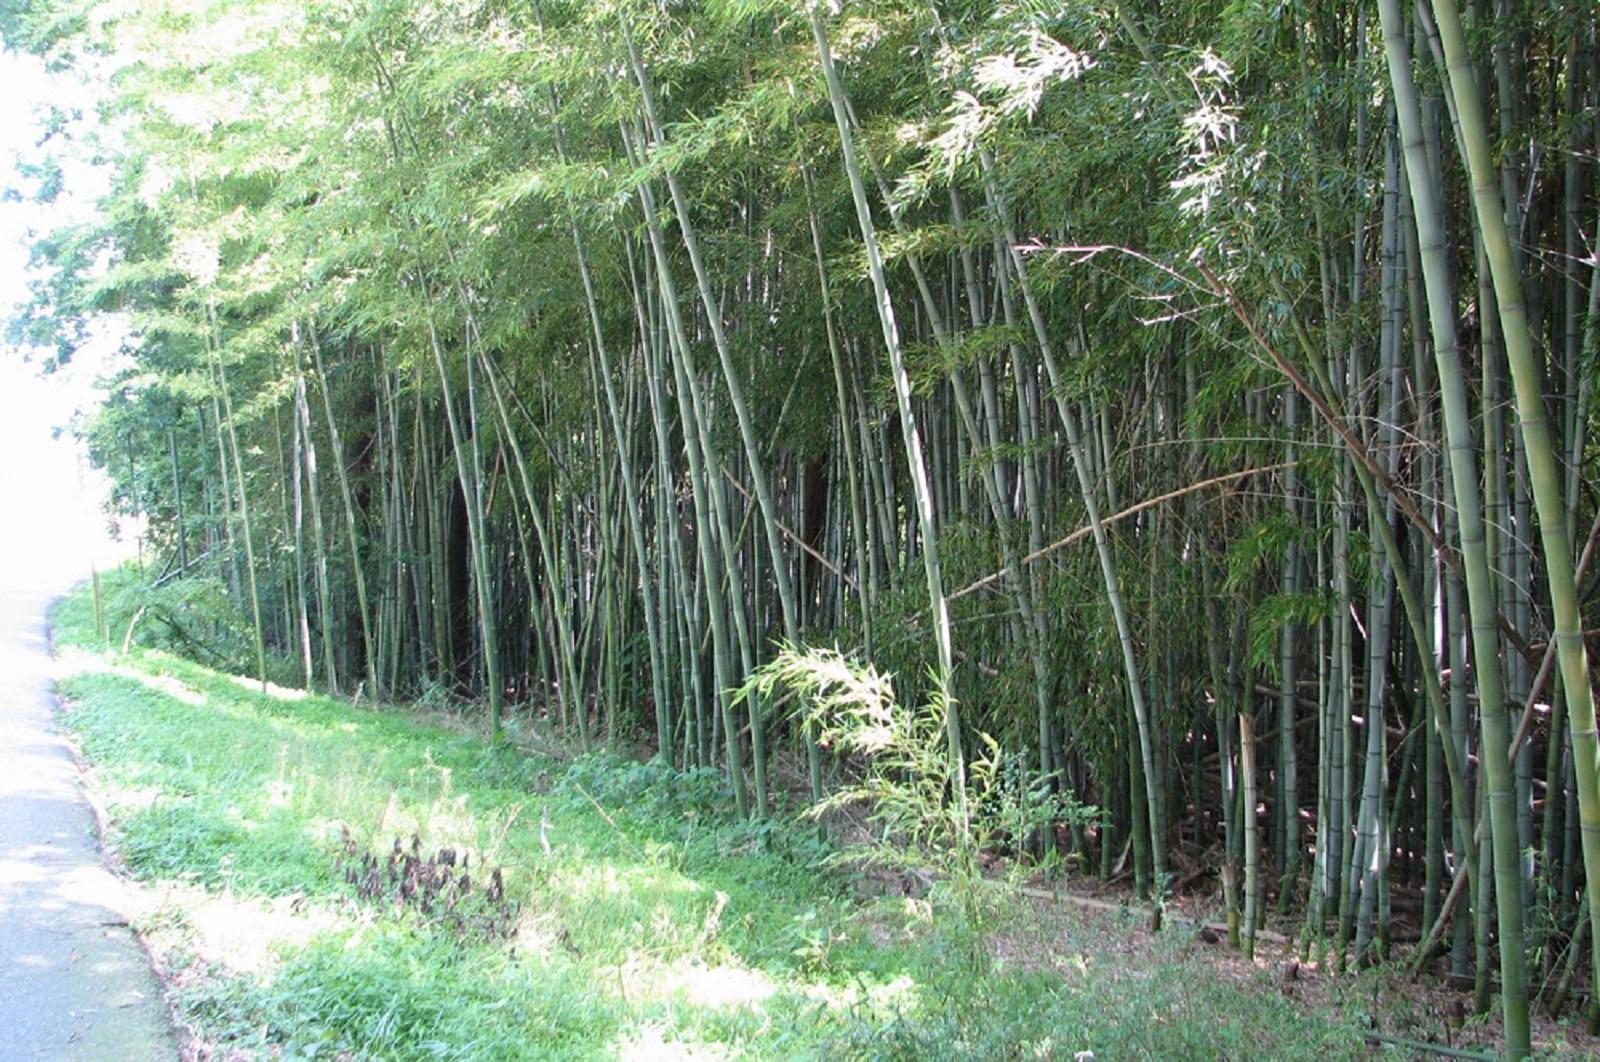 invasive bamboo growing along a roadway